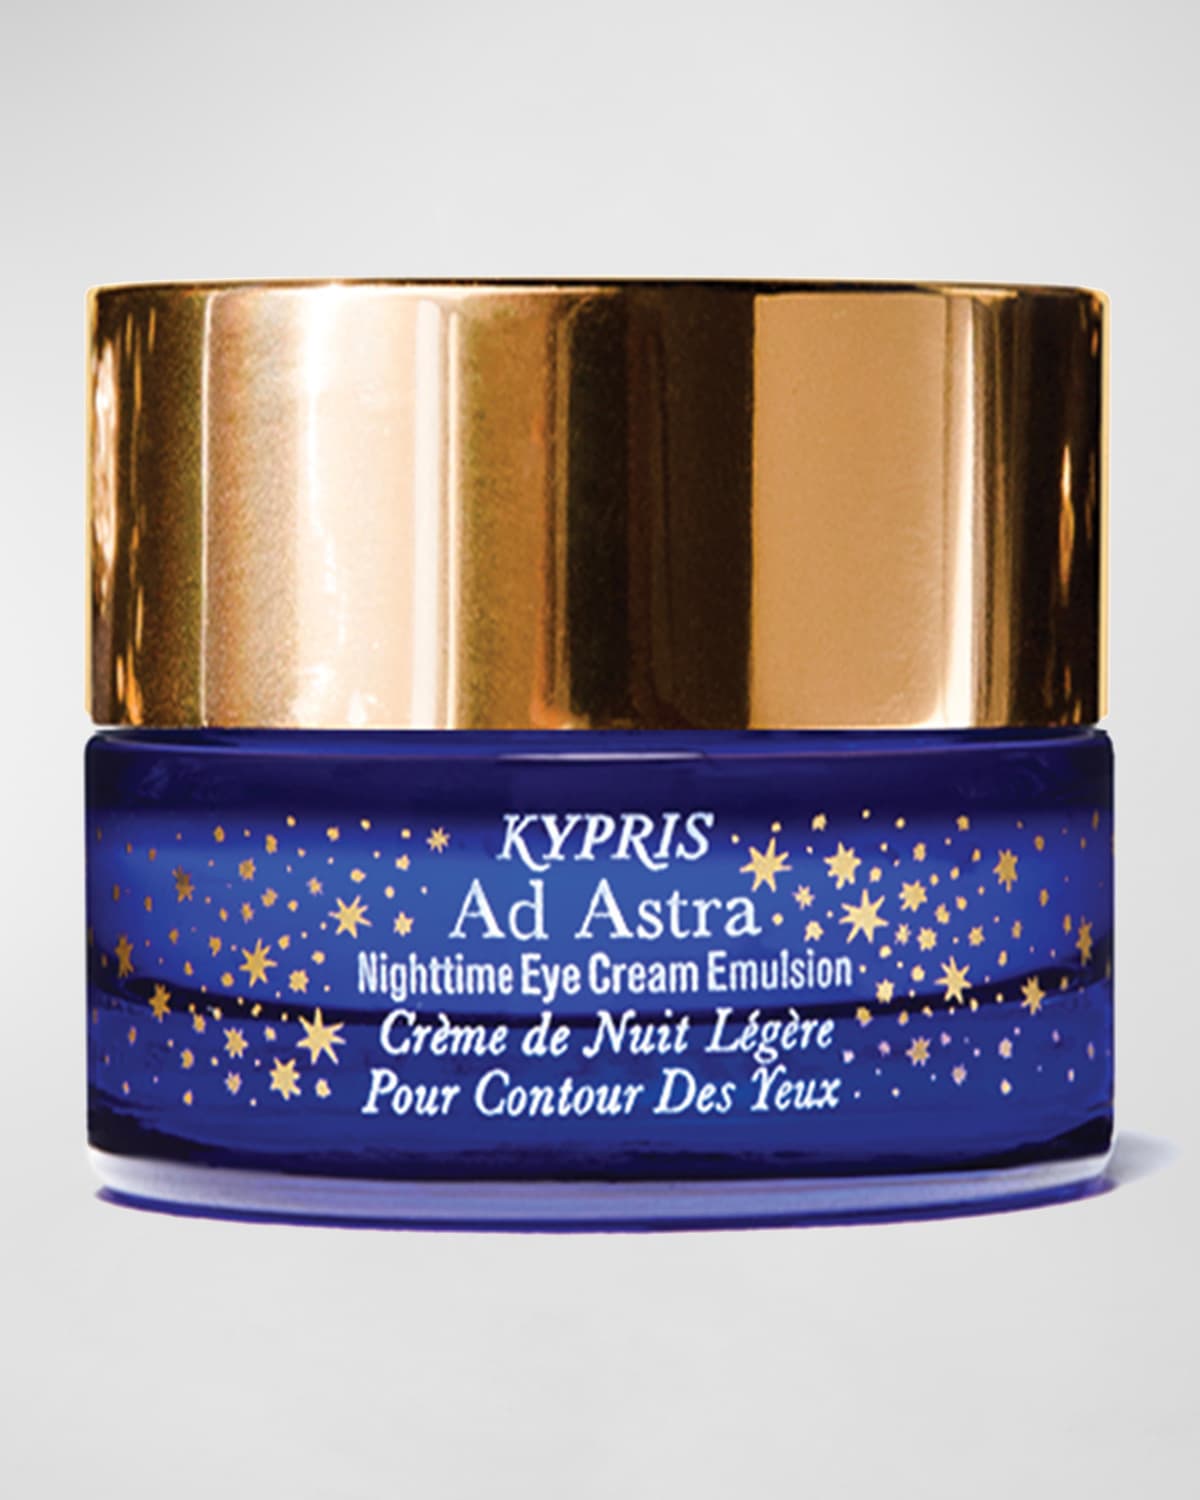 KYPRIS Ad Astra Nighttime Eye Cream Emulsion, 0.47 oz.